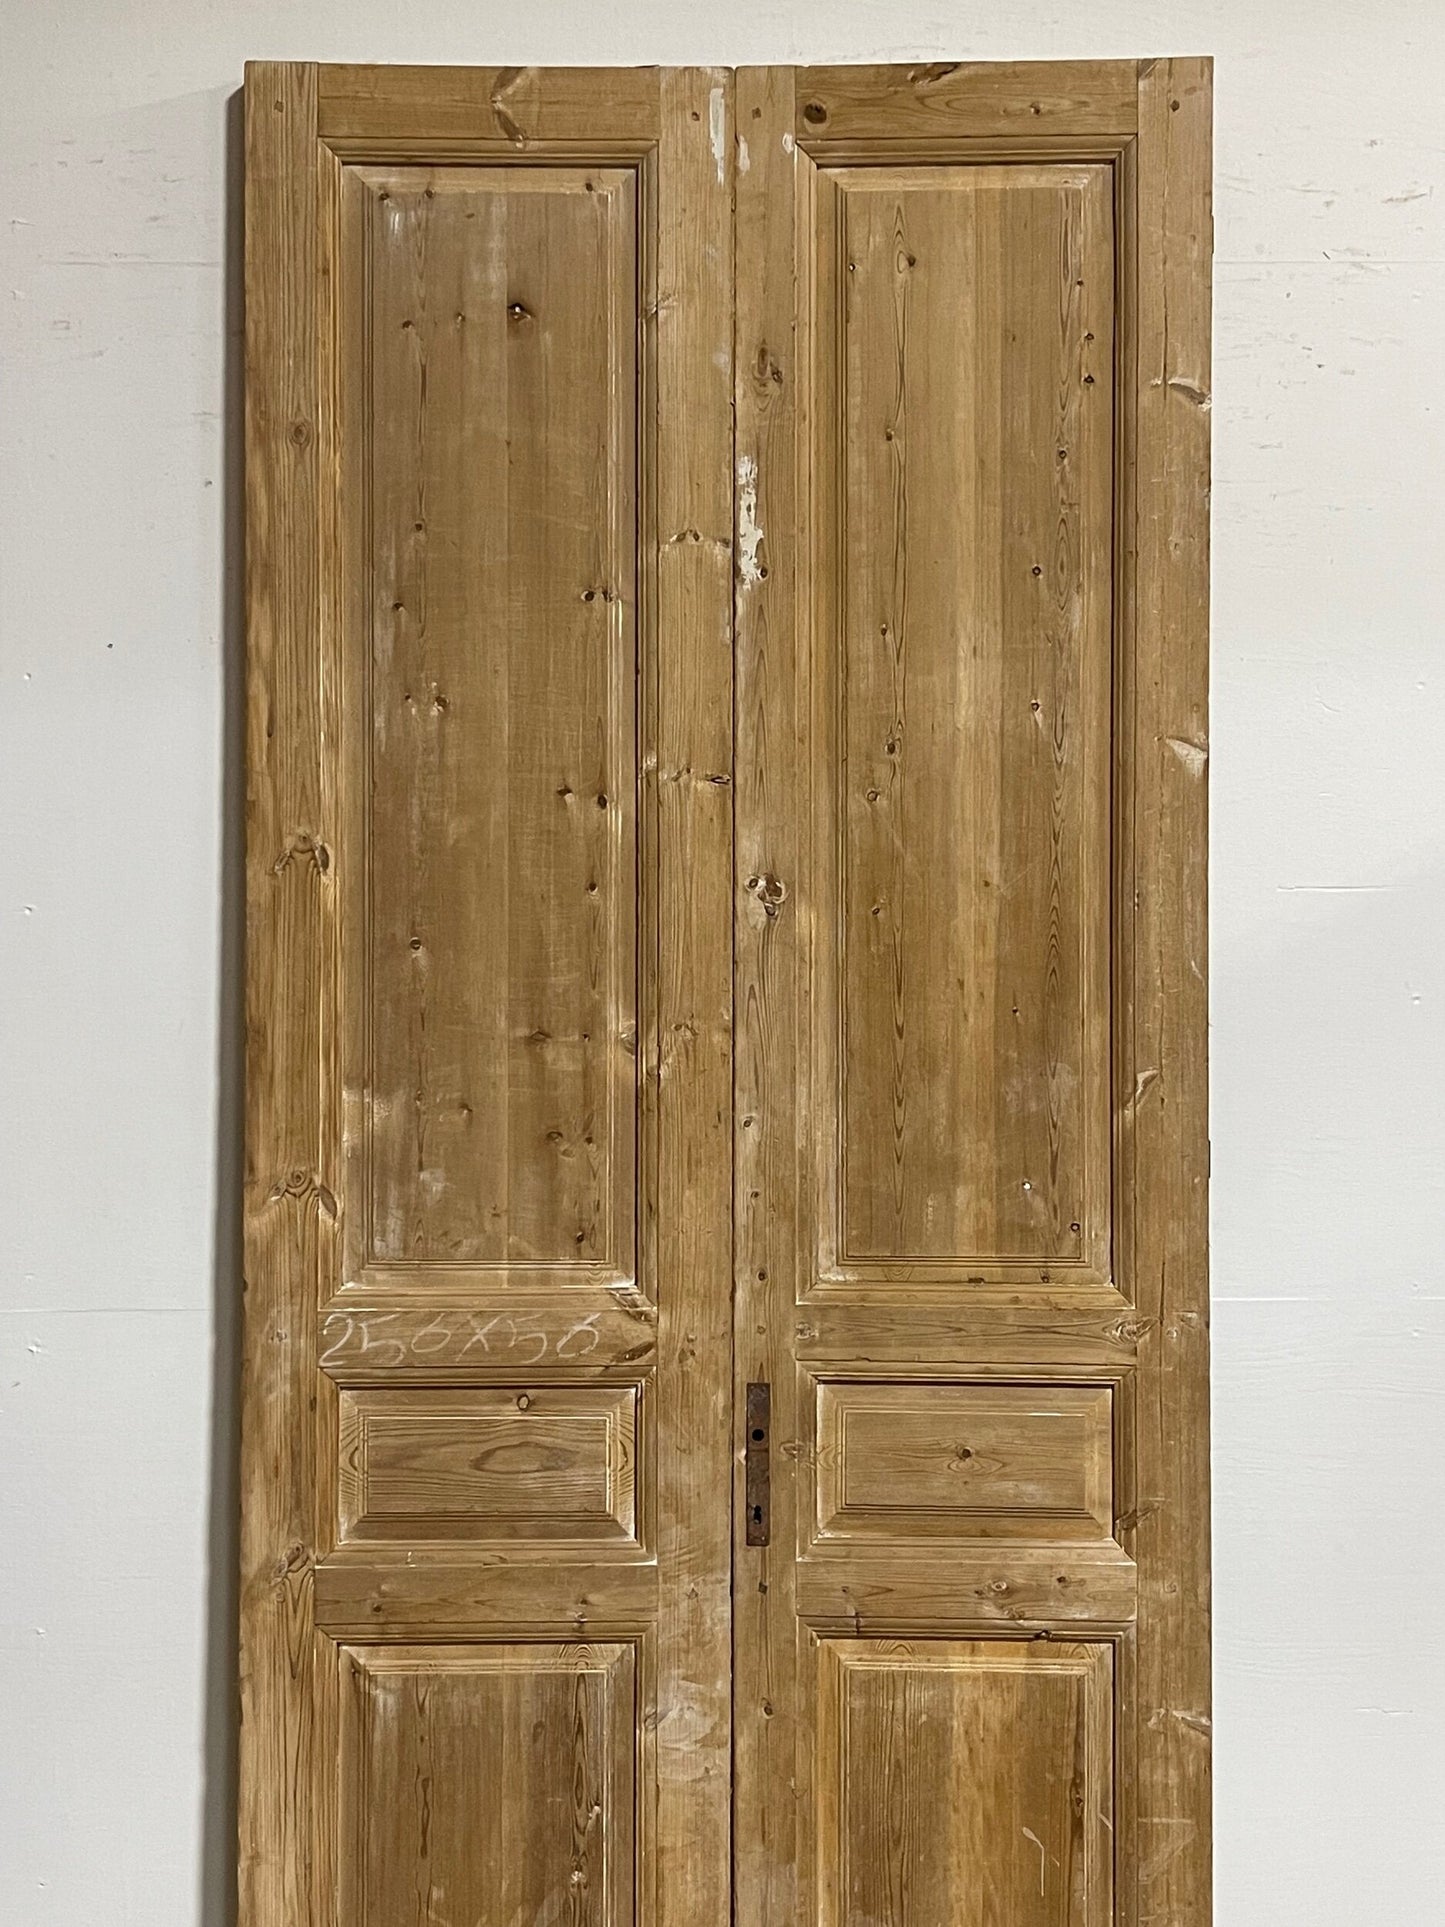 Antique French doors (104.25x43.5) H0095s